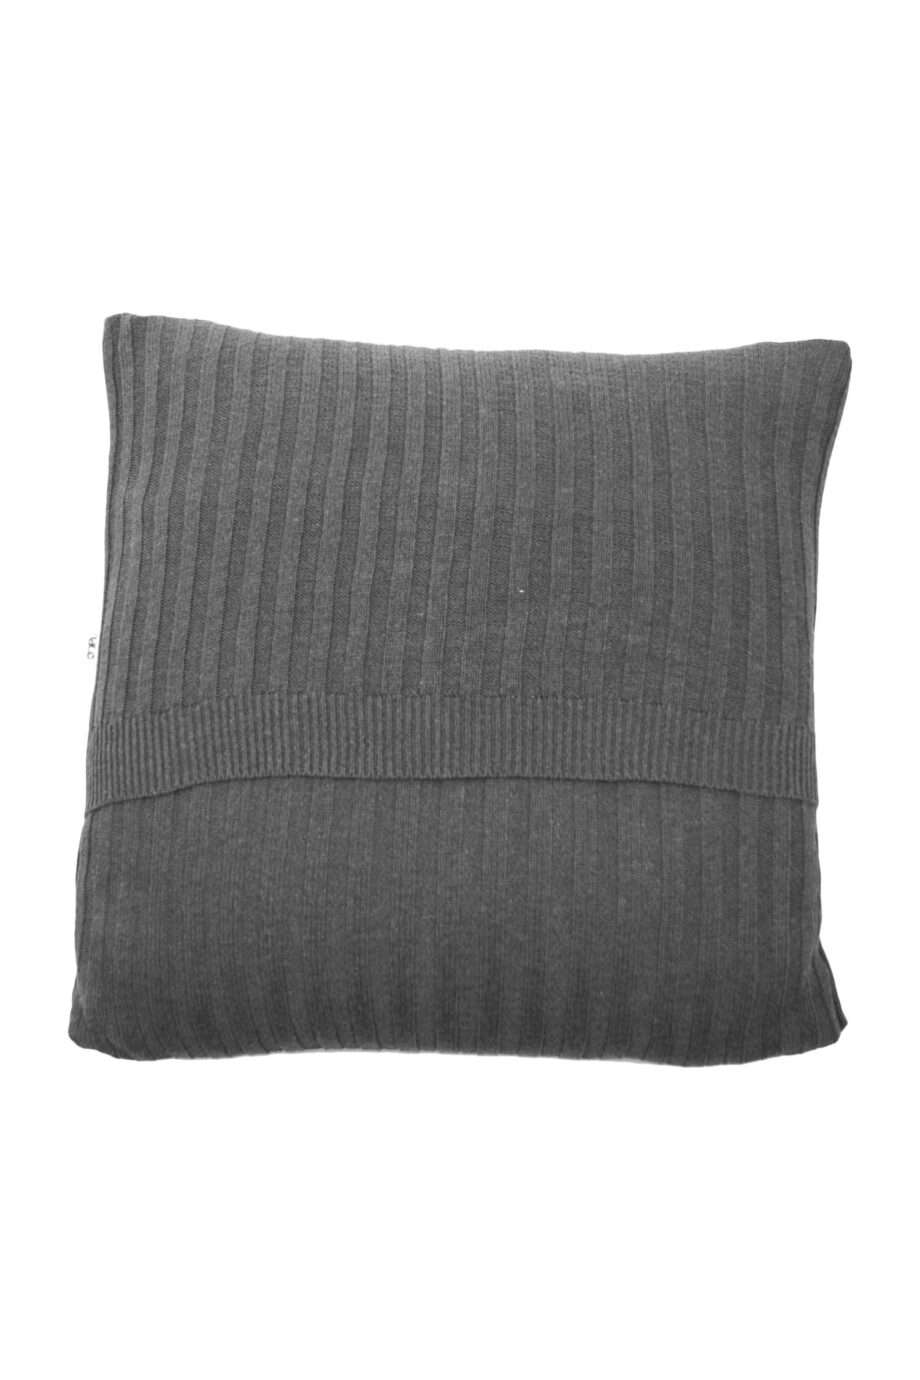 ribs small grey knitted cotton pillowcase medium